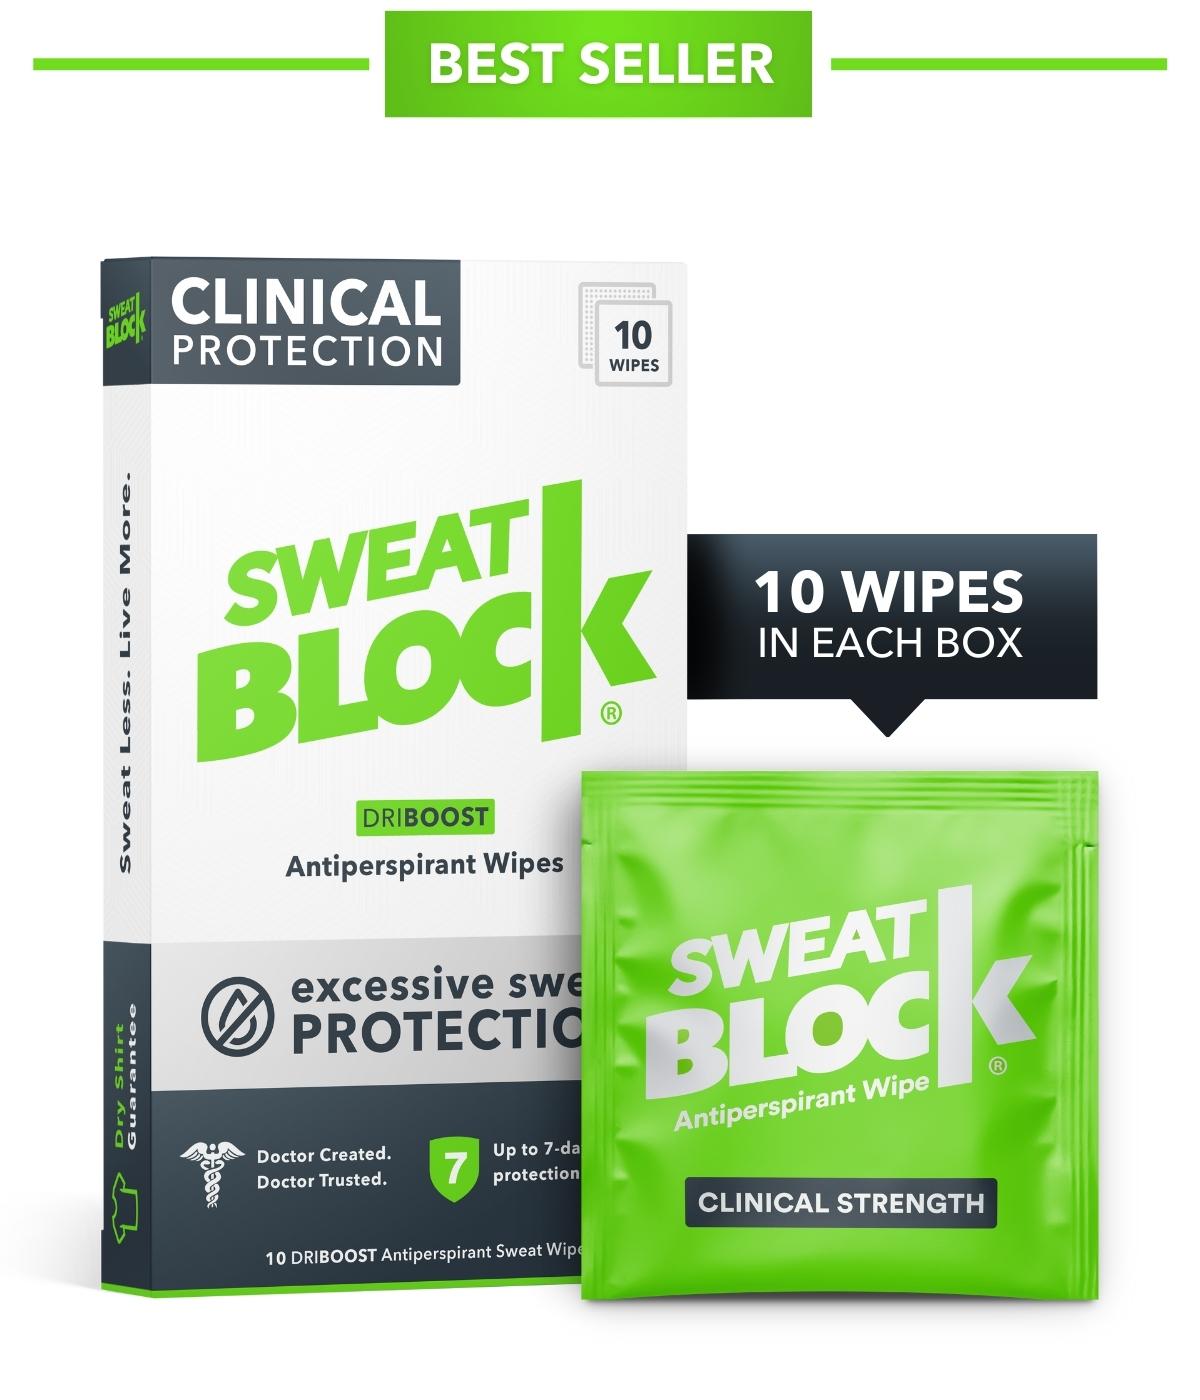 SweatBlock Antiperspirant Wipes for Excessive Sweating